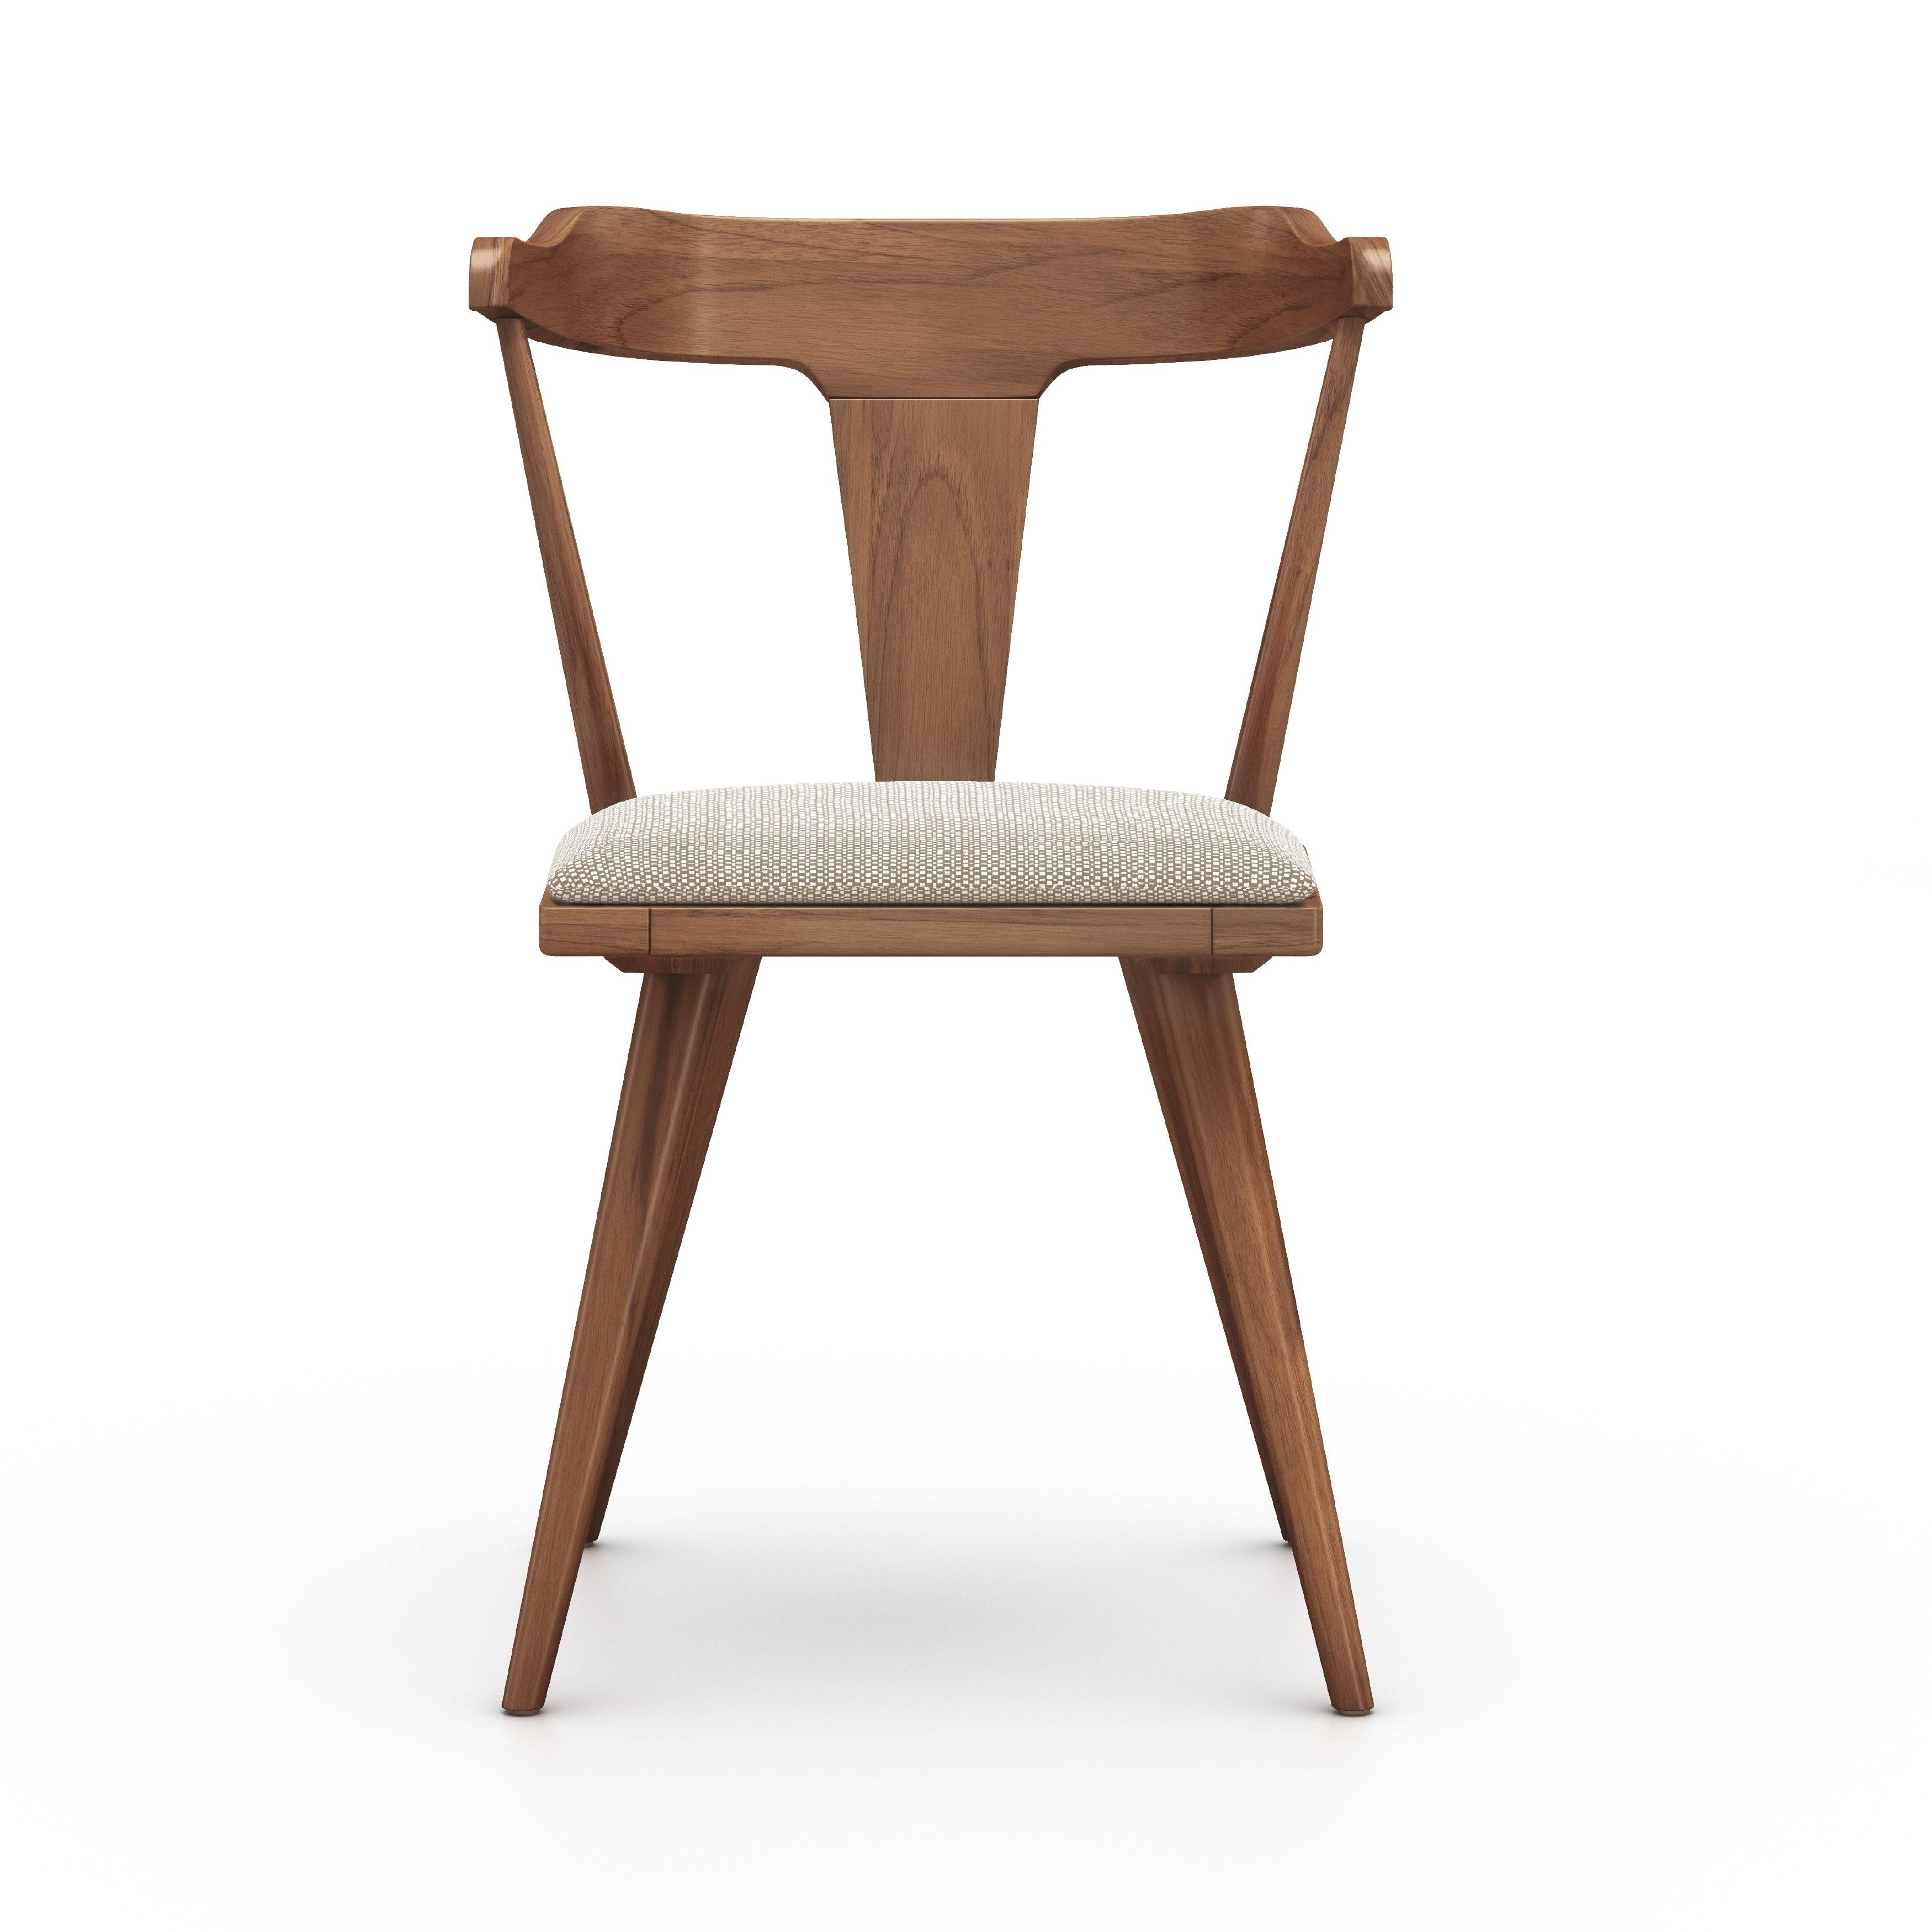 Coleson Outdoor Dining Chair - Reimagine Designs - Outdoor, outdoor armchair, Outdoor Armchairs, outdoor chair, outdoor dining table